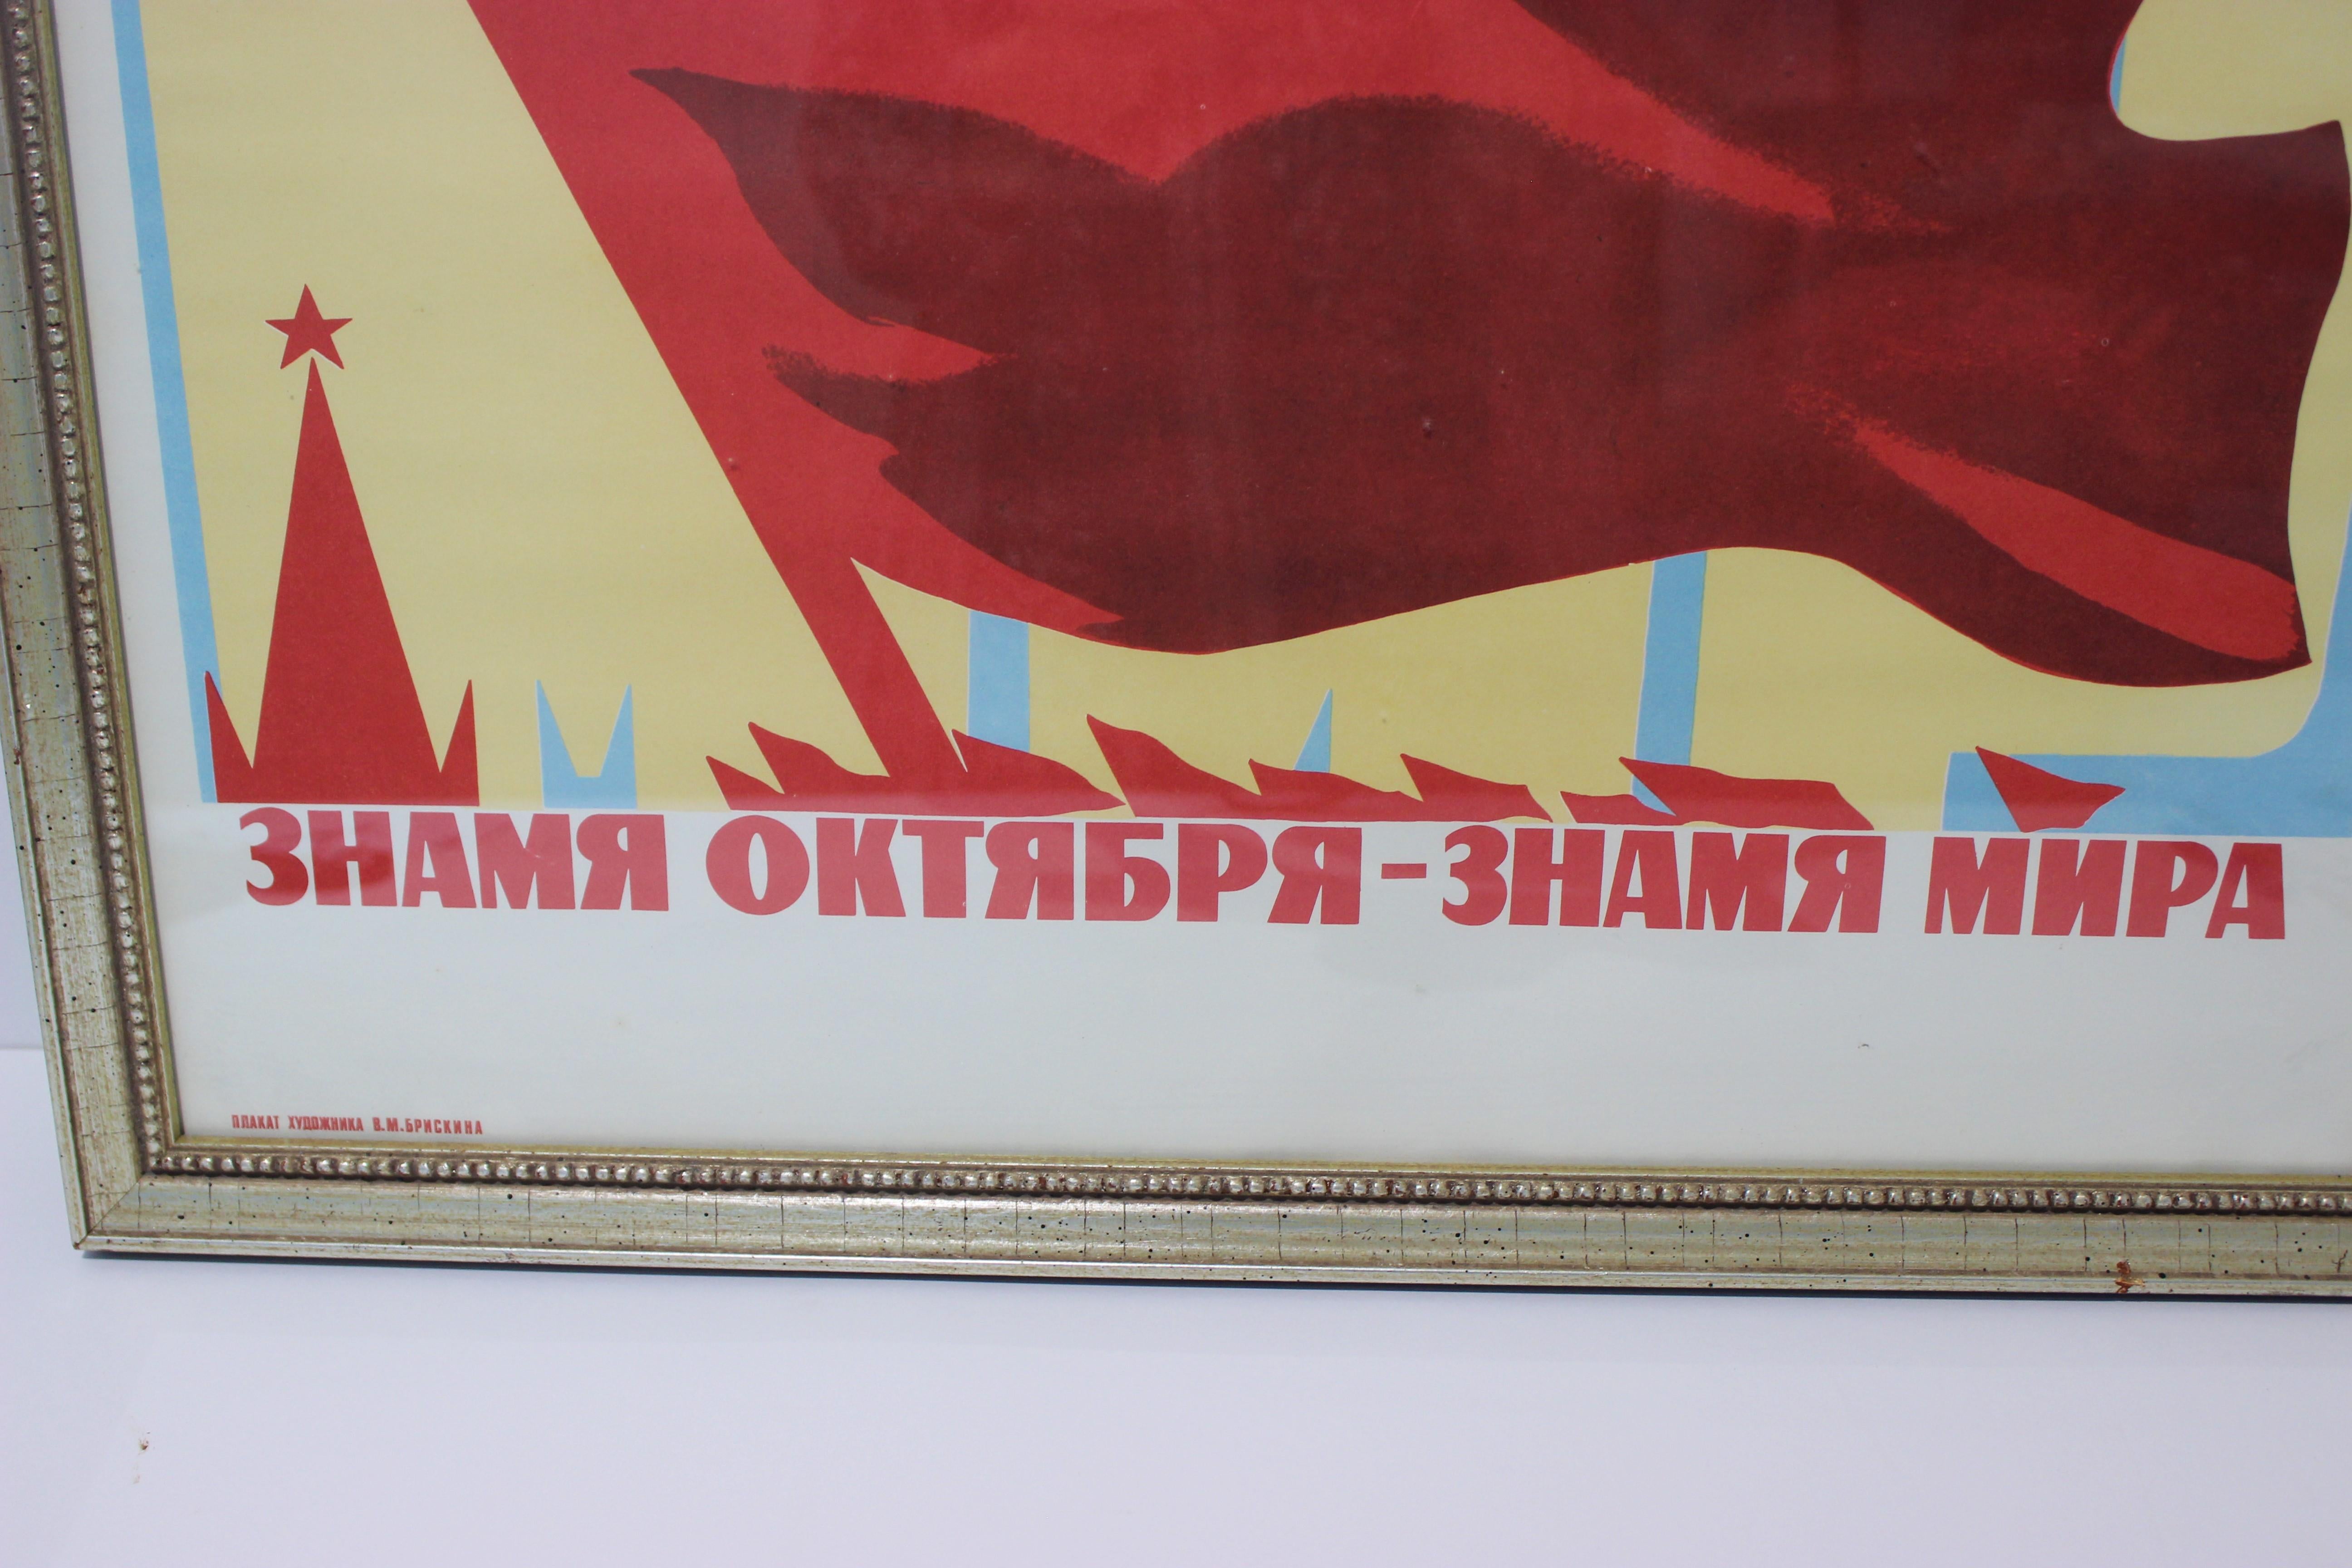 Russian 1970s Soviet Union Poster